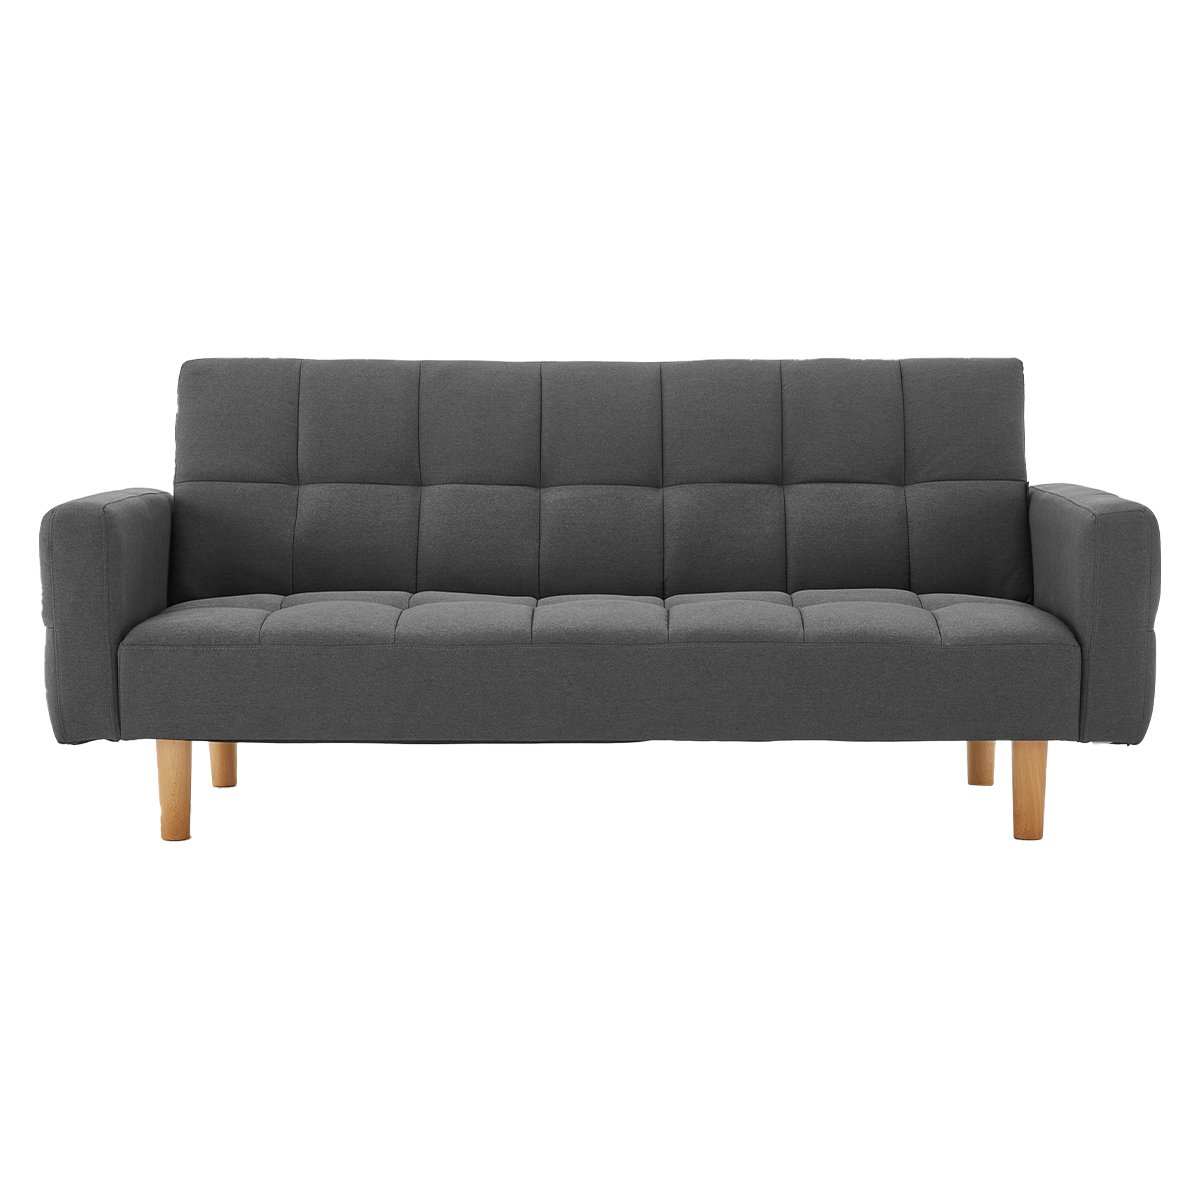 Sarantino 3-Seater Fabric Sofa Bed Futon - Dark Grey 1